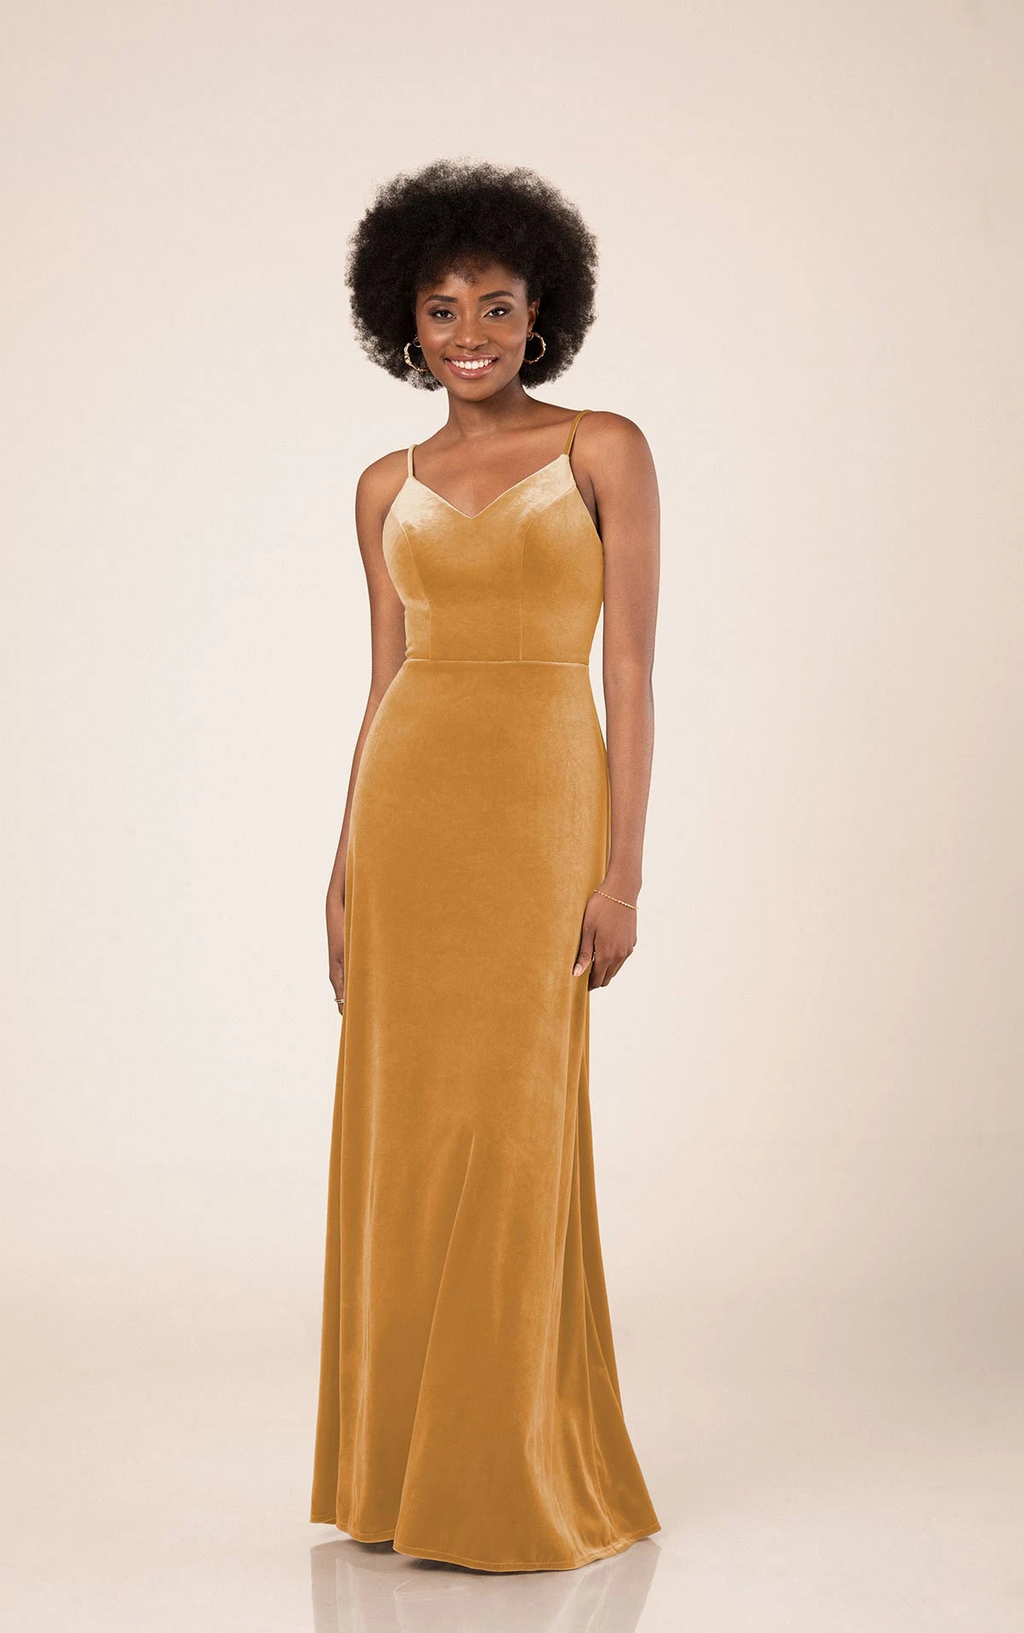 Sorella Vita Dress Style 9644 (Amber-size 10) Prom, Ball., Black-tie, Bridesmaid, Pageant